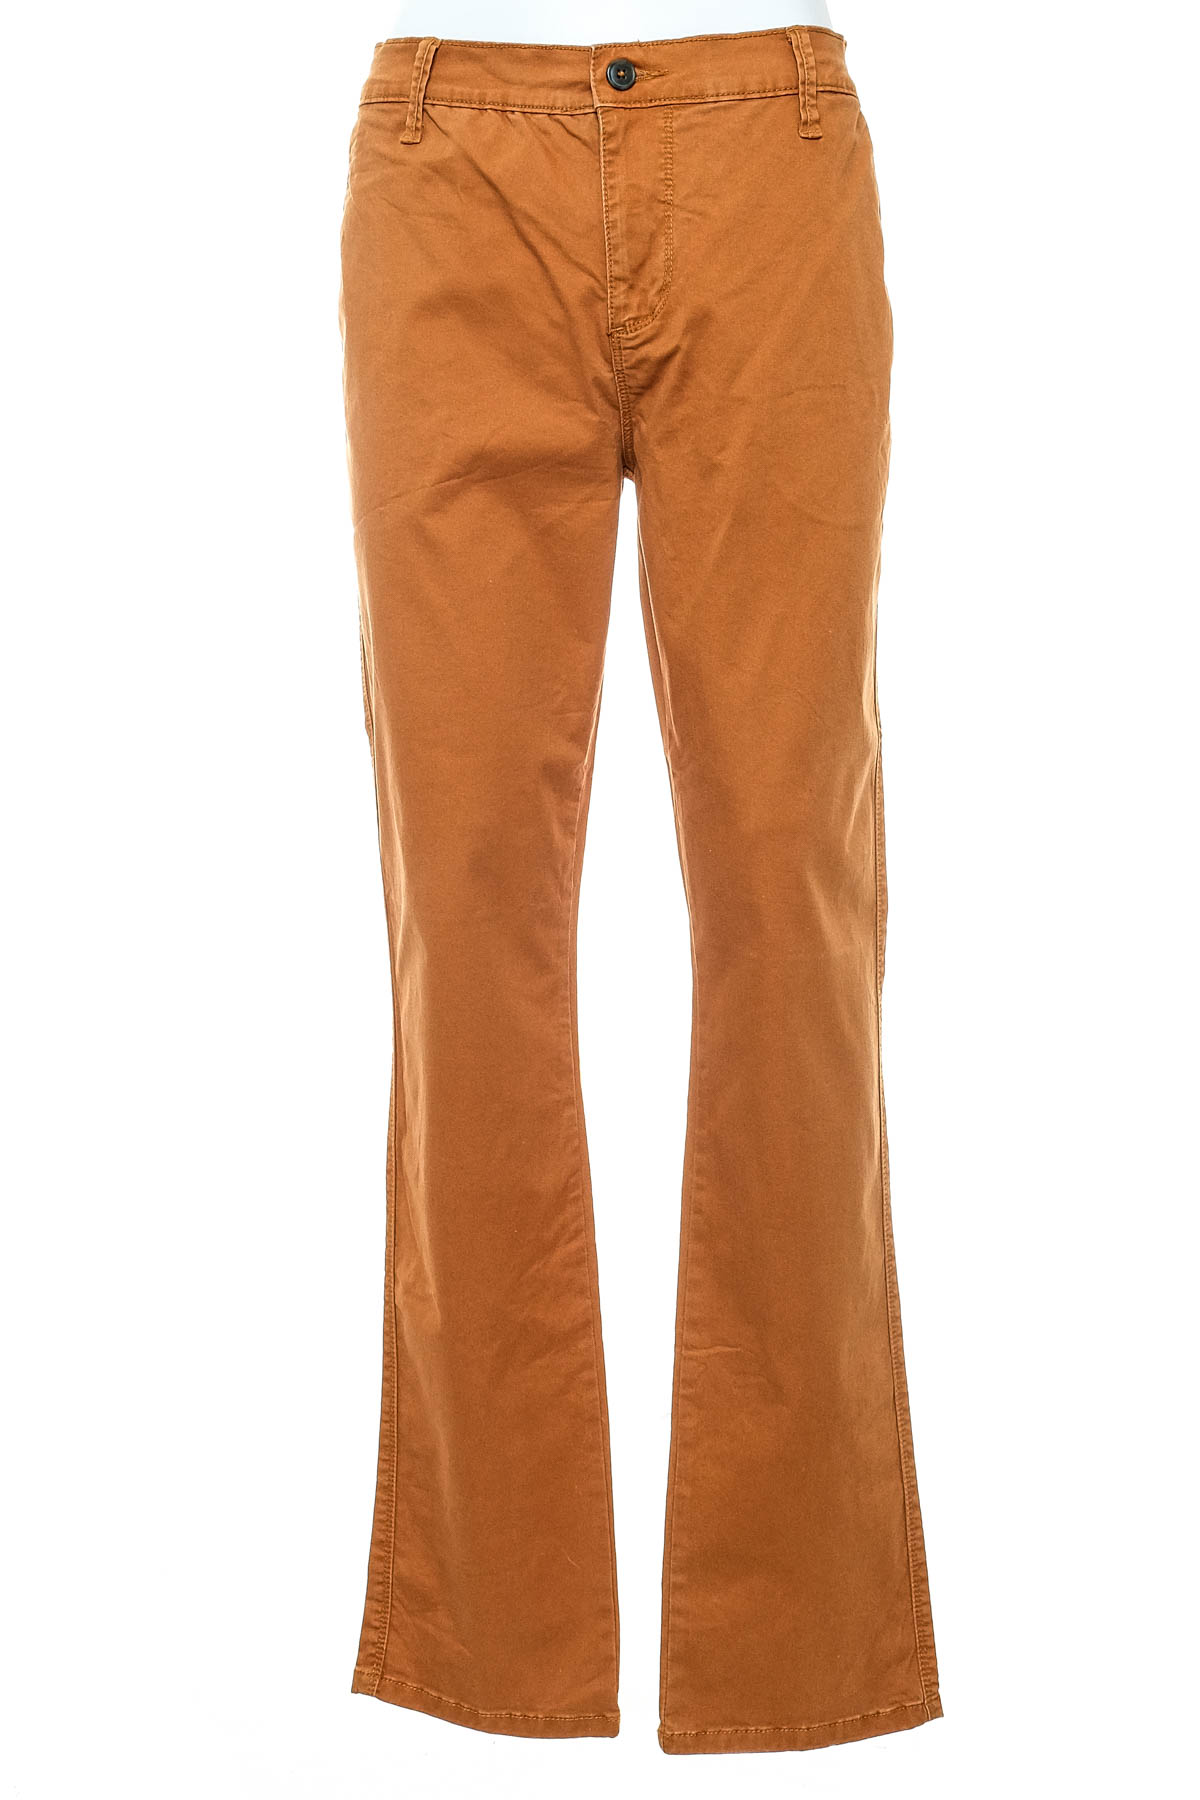 Men's trousers - KIABI - 0